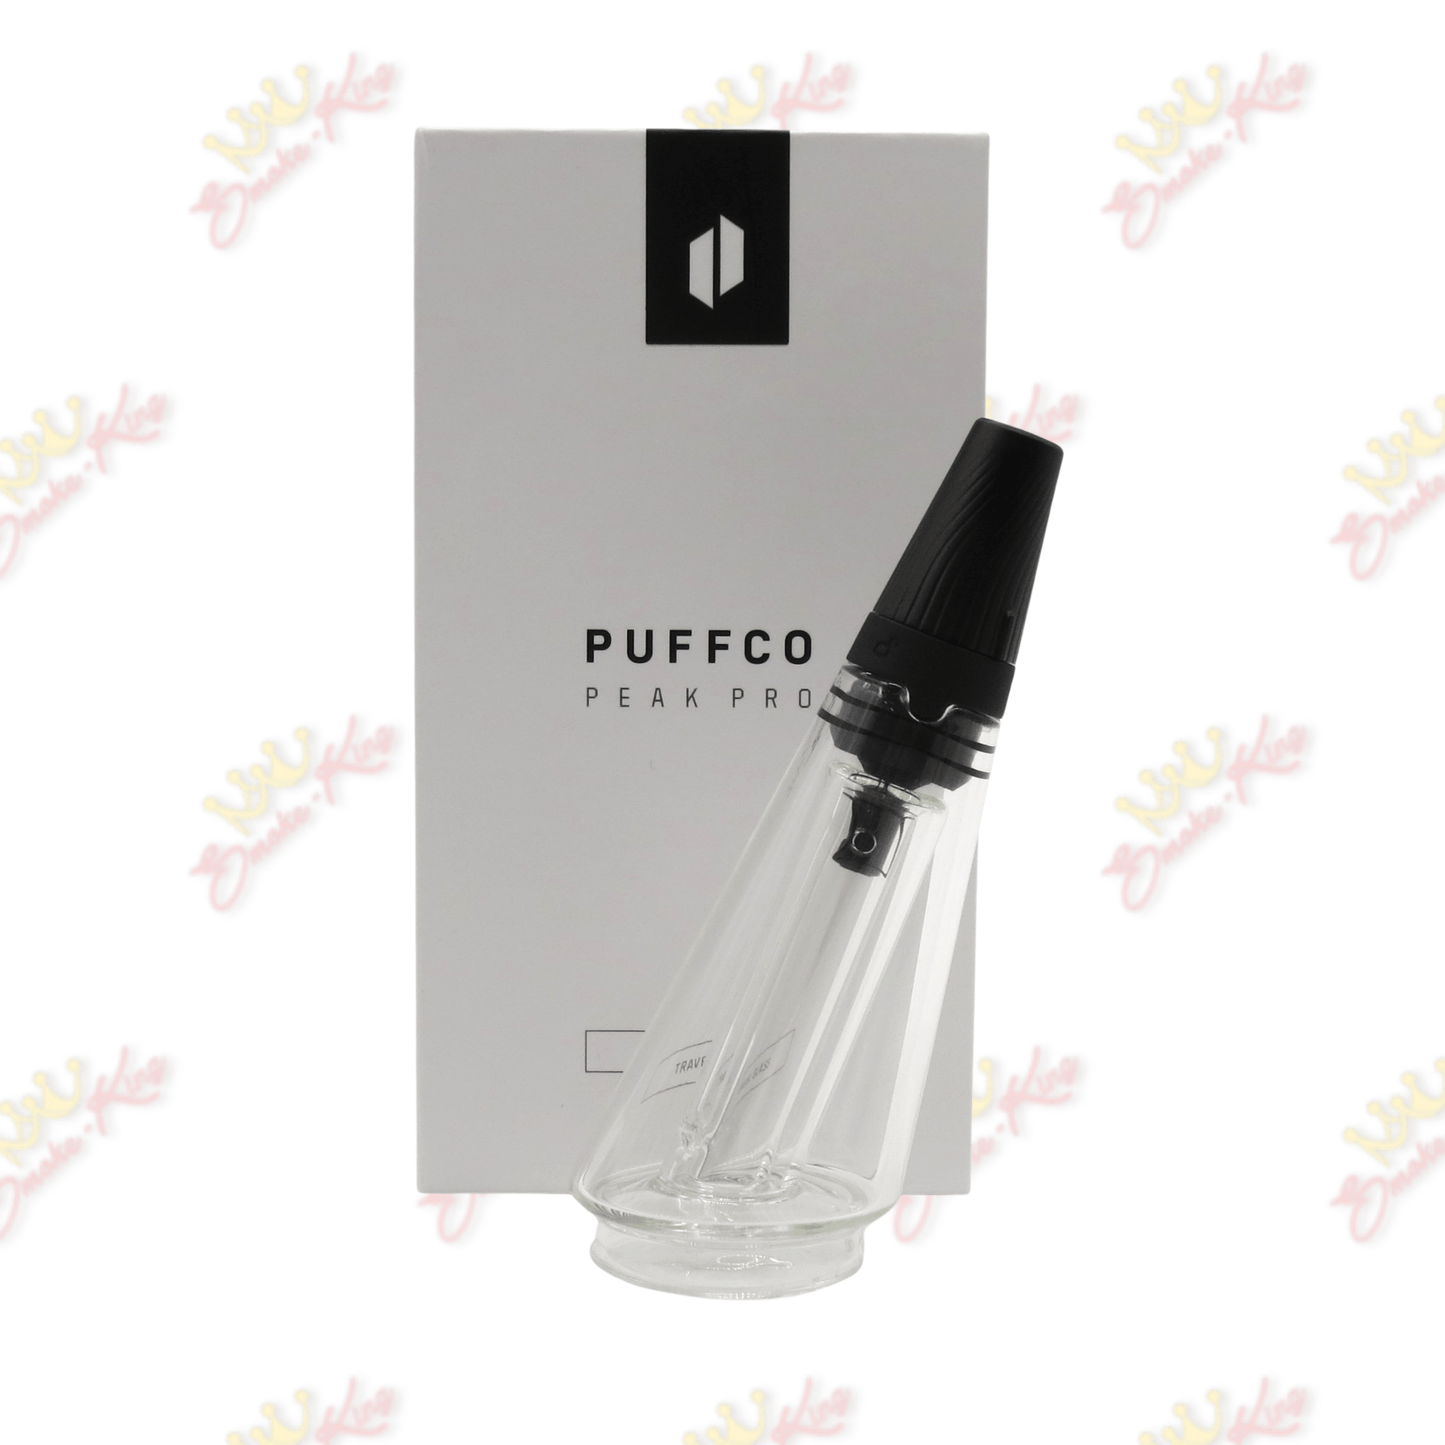 Puffco wax-vapes Travel Glass - Puffco Peak Pro